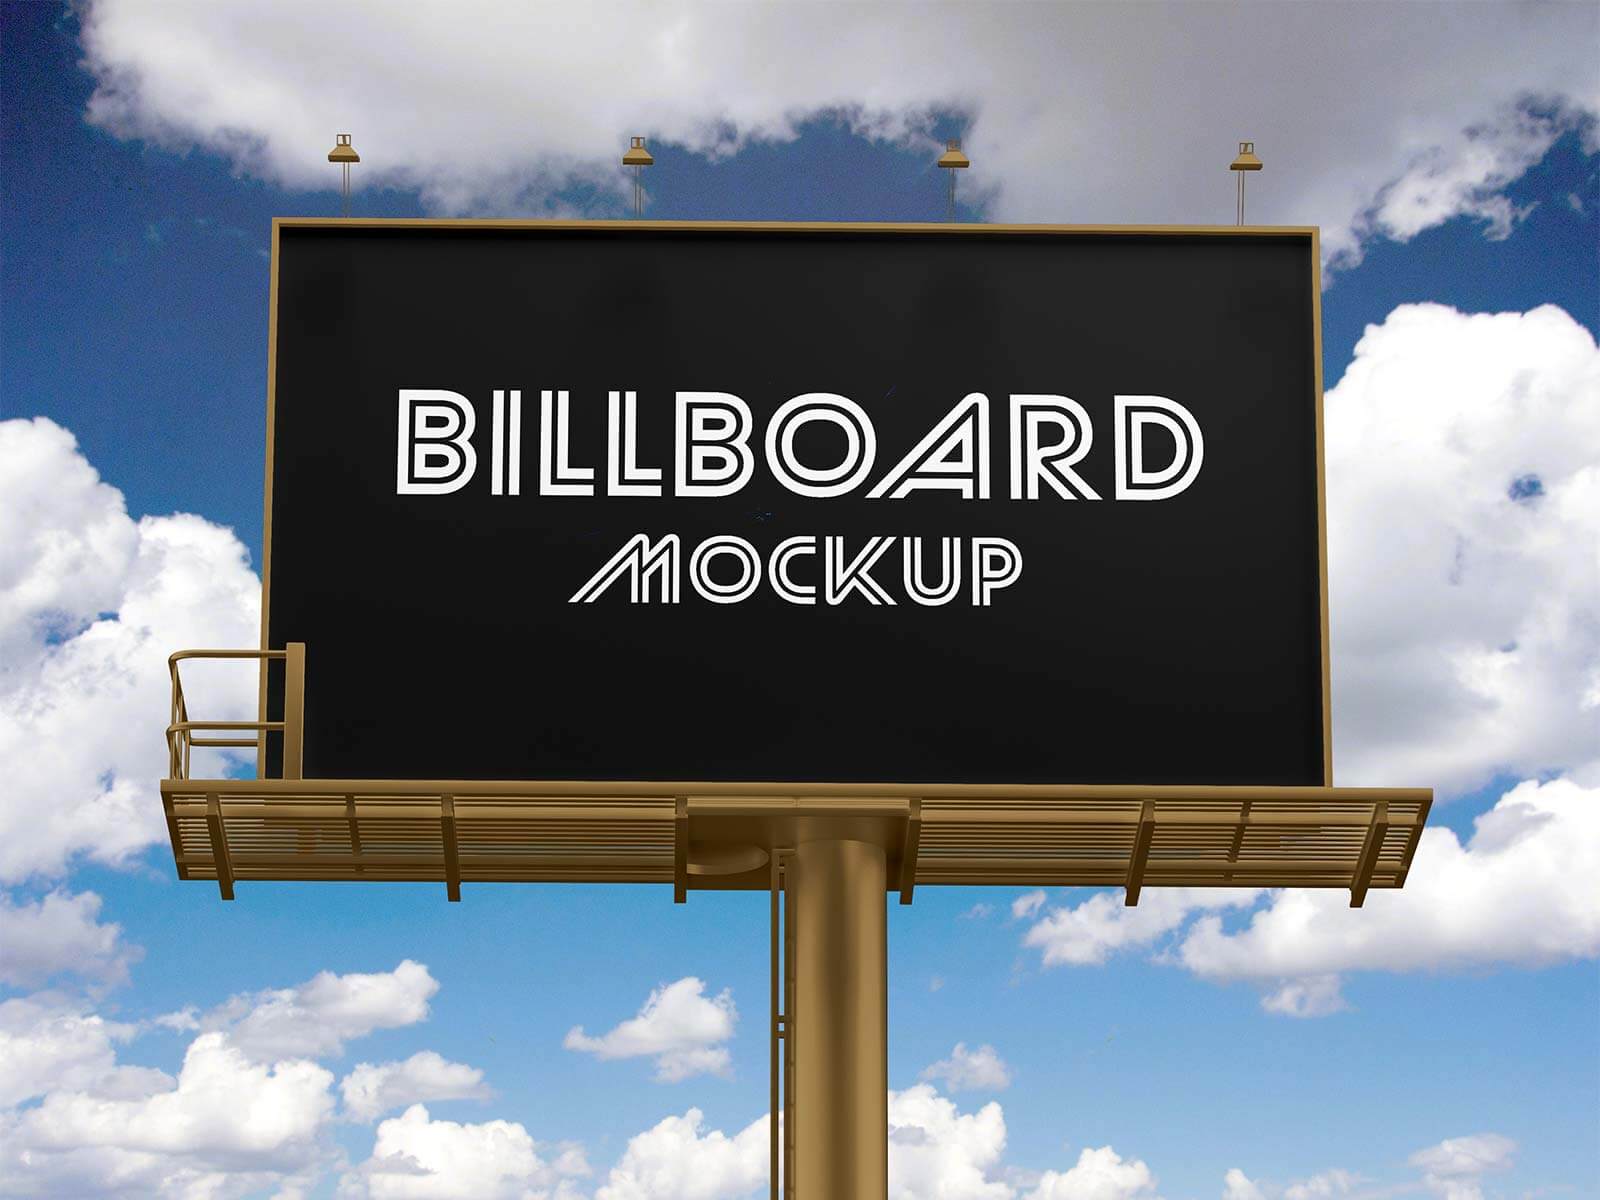 Free-Outdoor-Advertising-Billboard-Mockup-PSD (1)